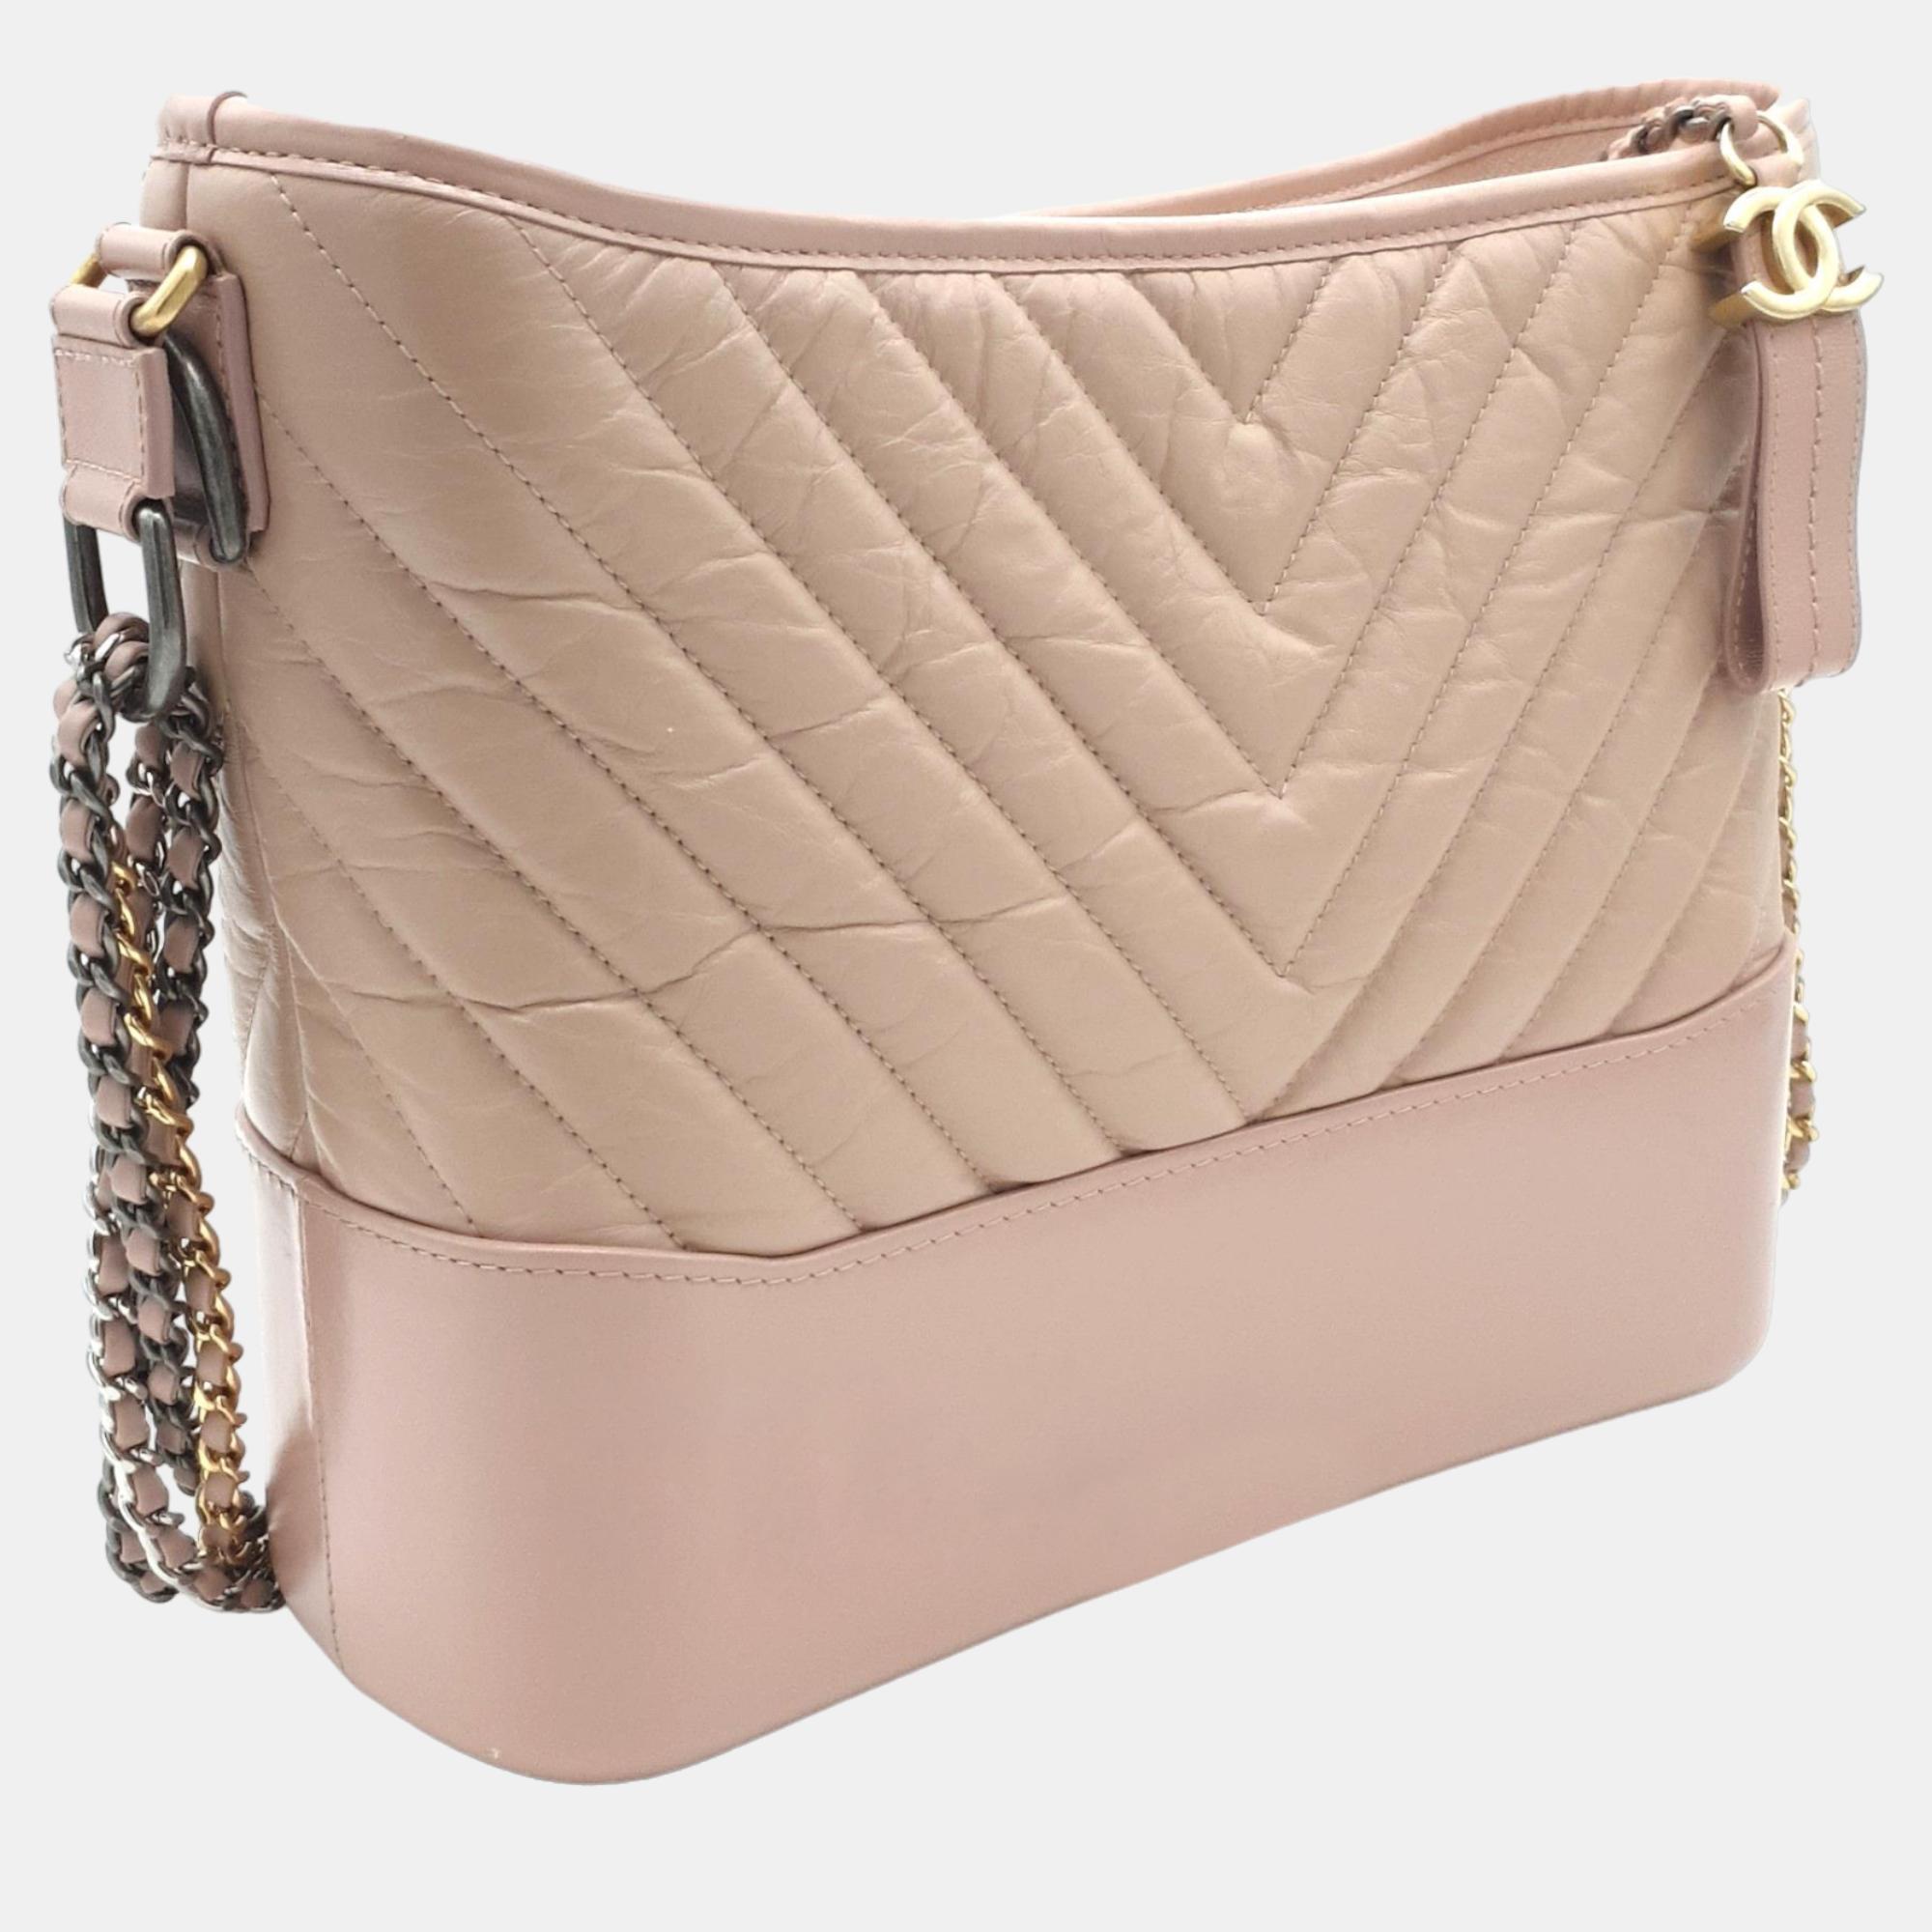 Chanel Pink Leather Medium Gabrielle Chevron Shoulder Bag